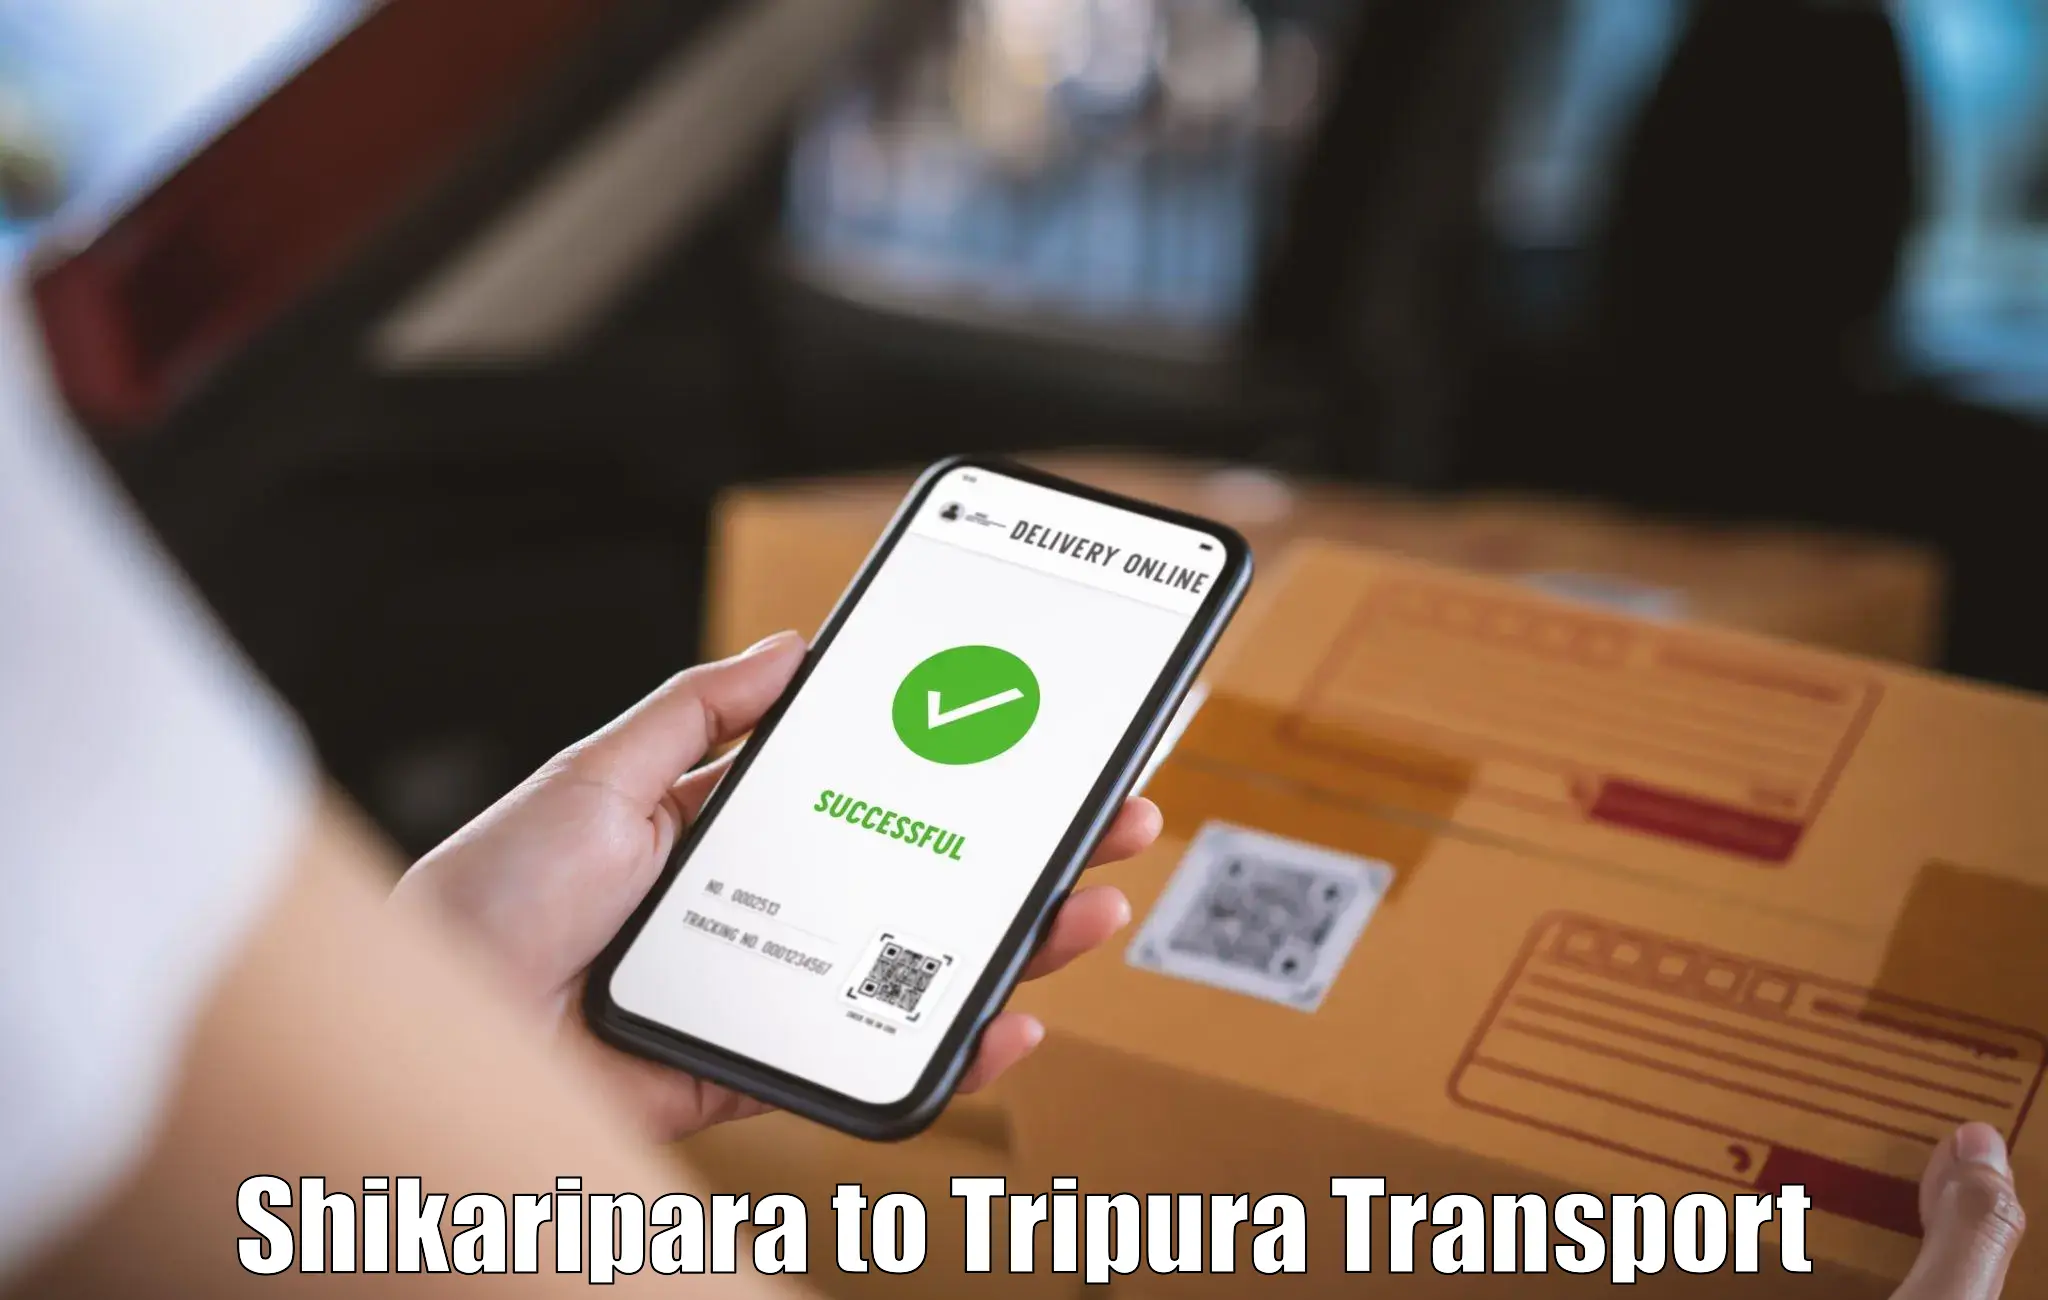 Lorry transport service Shikaripara to Tripura